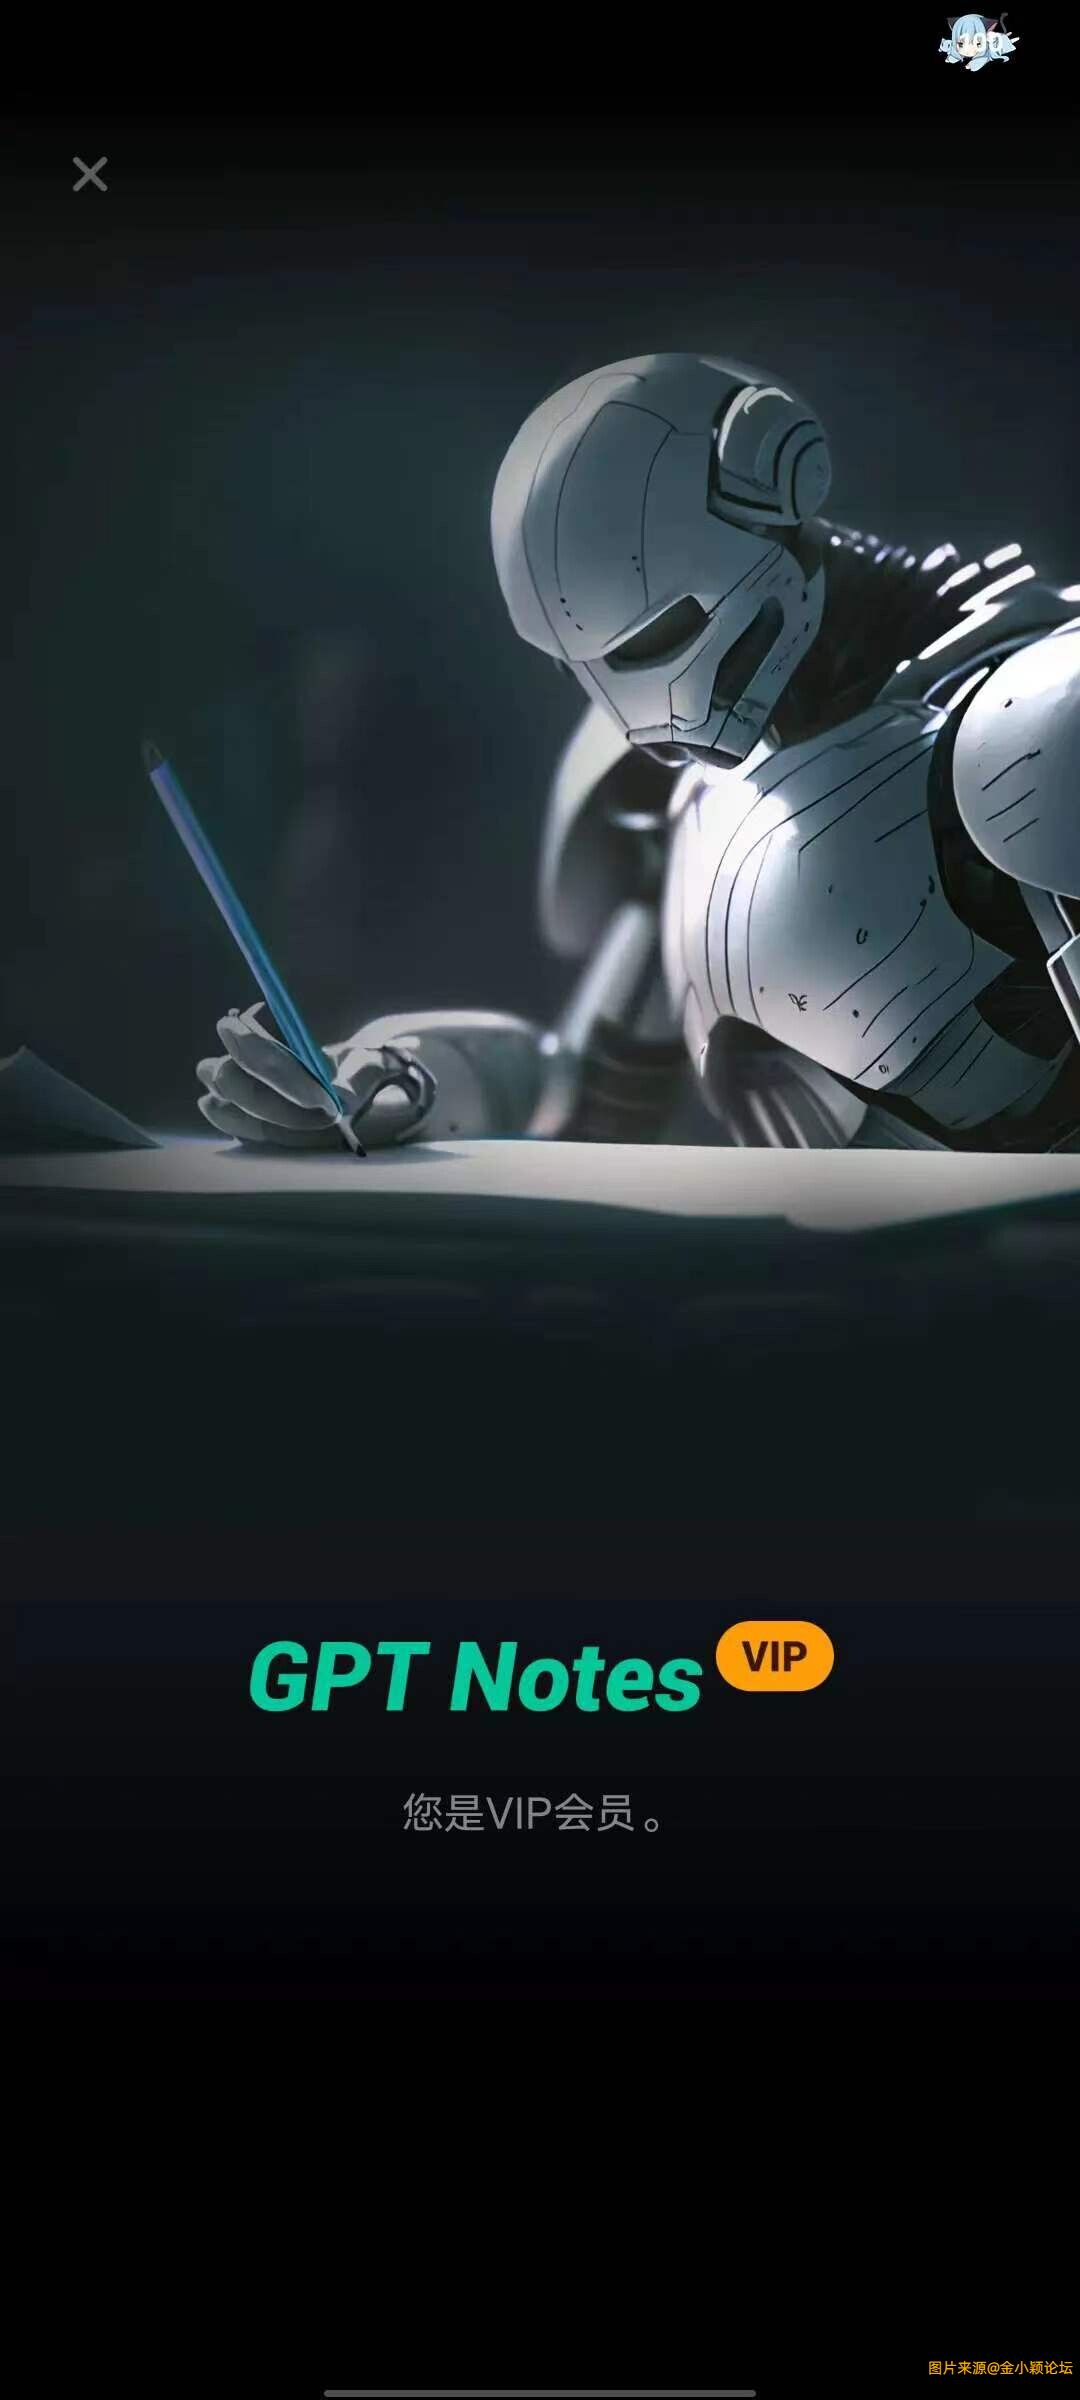 GPT Notes，智能AI写作汉化解锁版。